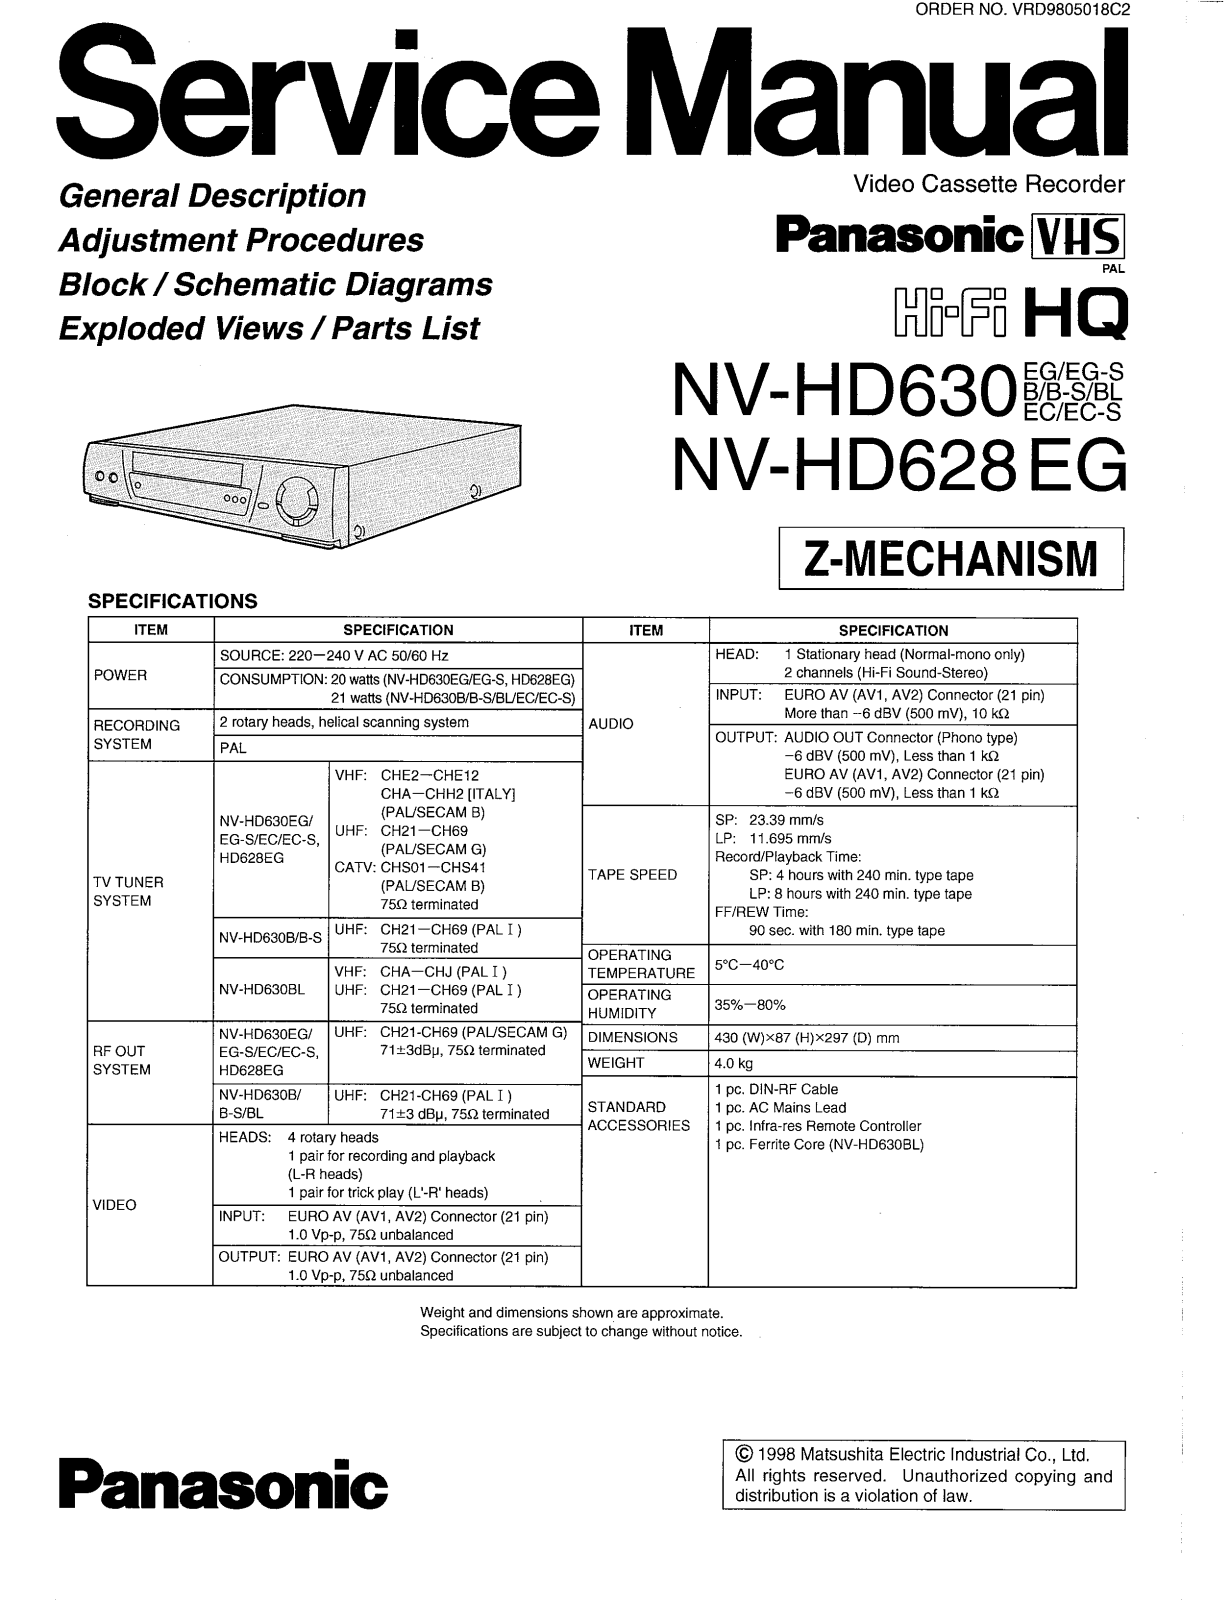 PANASONIC NV-HD630EG, NV-HD628EG Service Manual